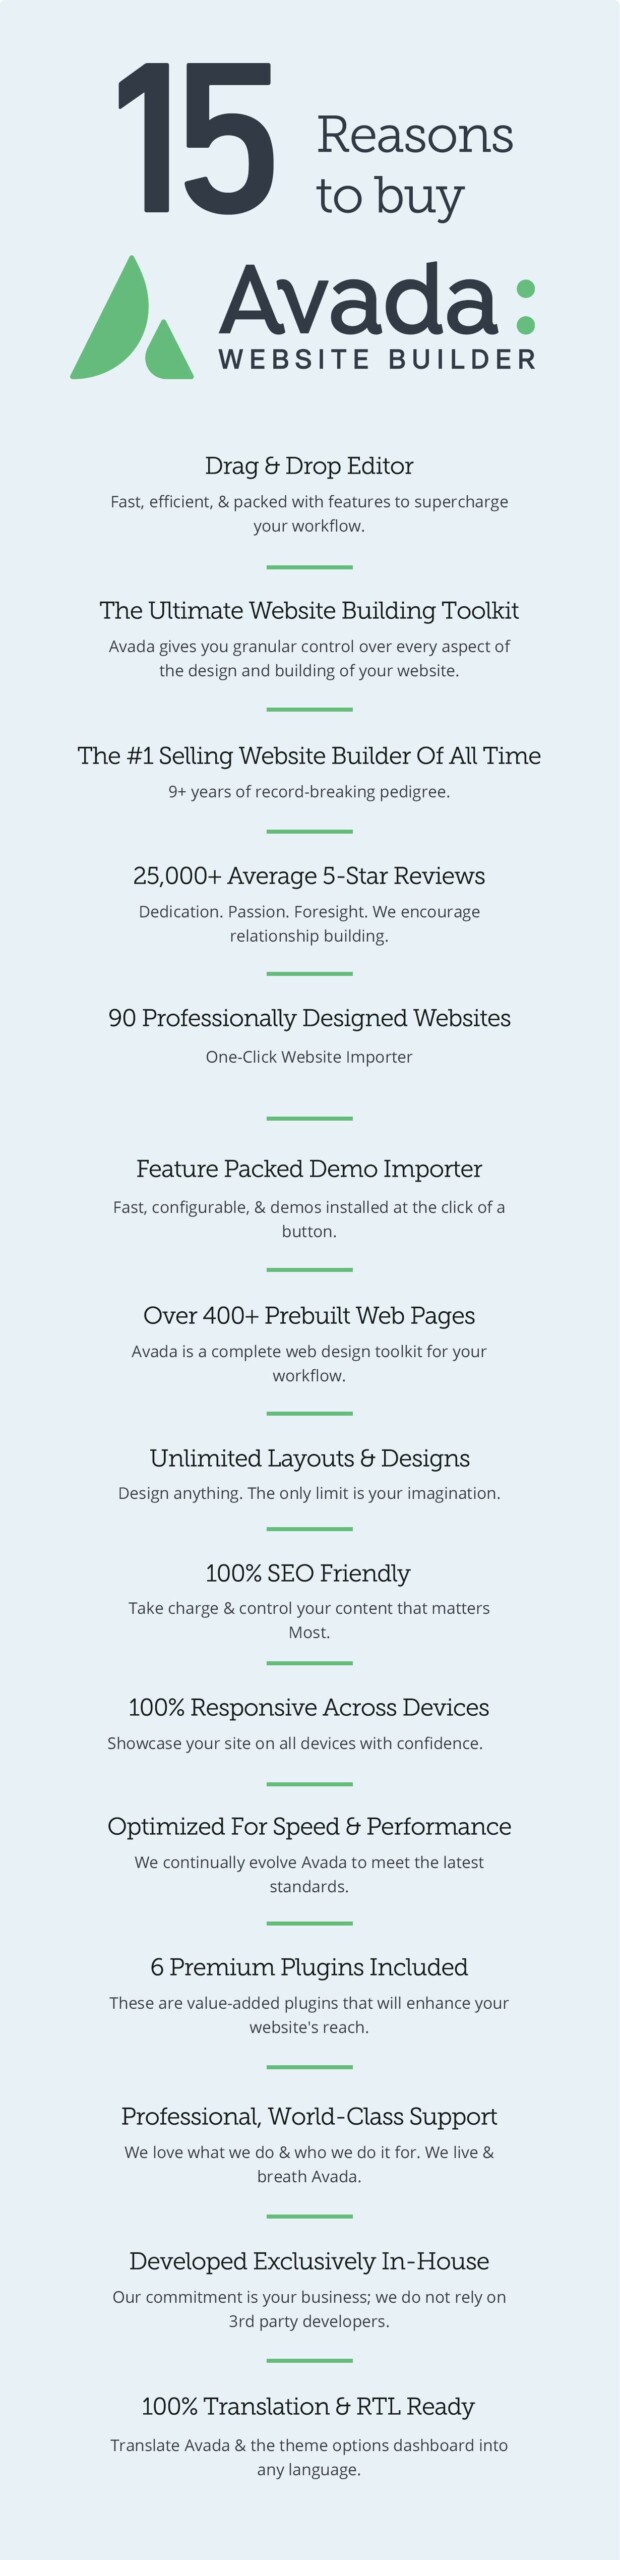 Avada | Website Builder For WordPress & eCommerce - 34